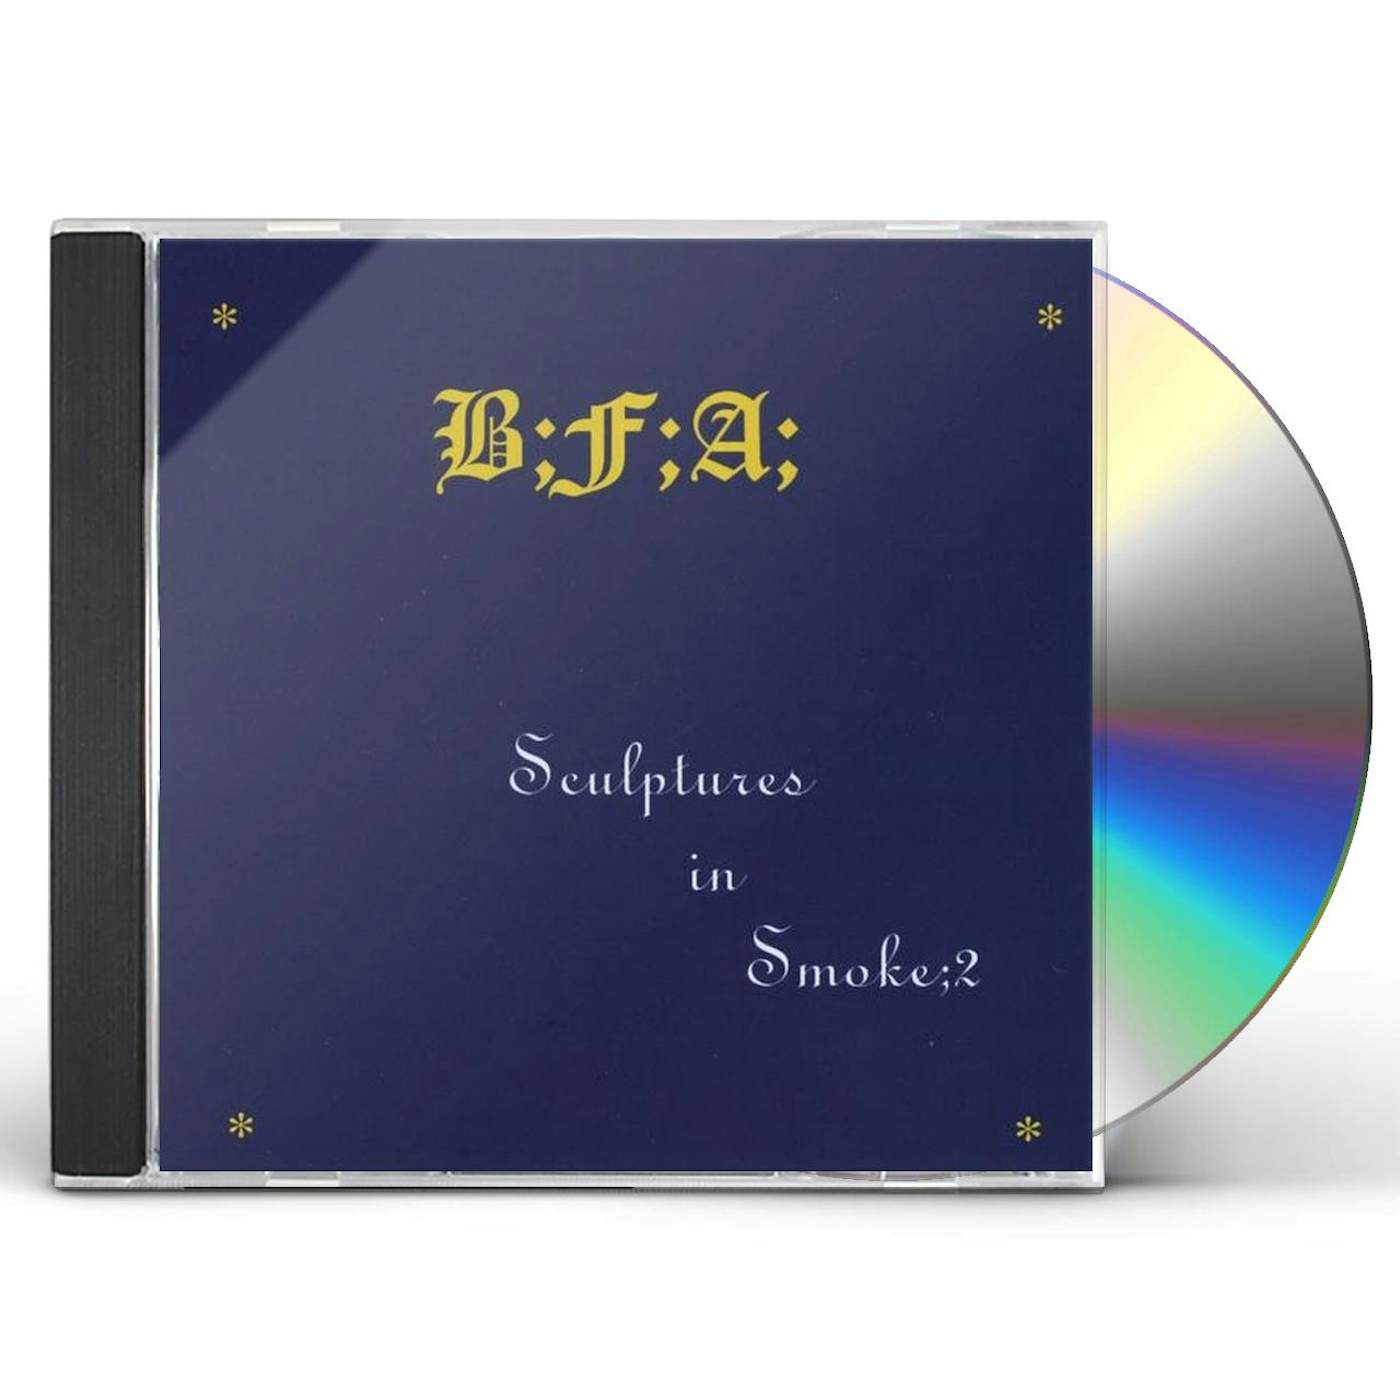 BFA SCULPTURES IN SMOKE 2 CD